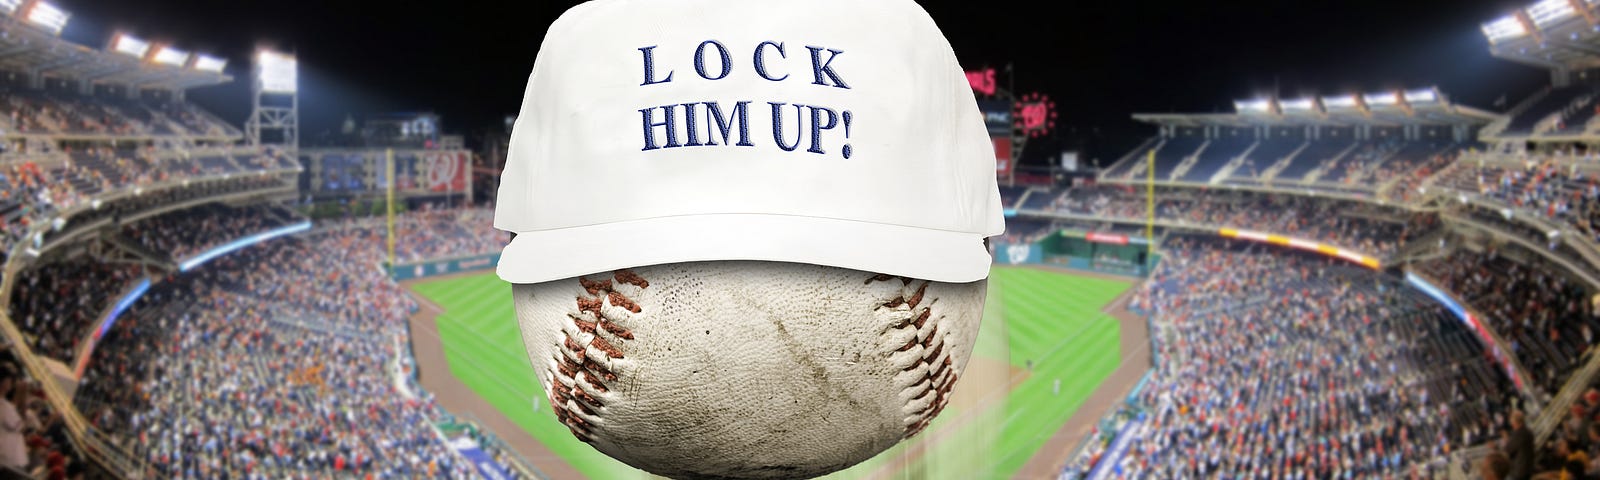 Home run ball with a MAGA cap that reads “Lock Him Up!”